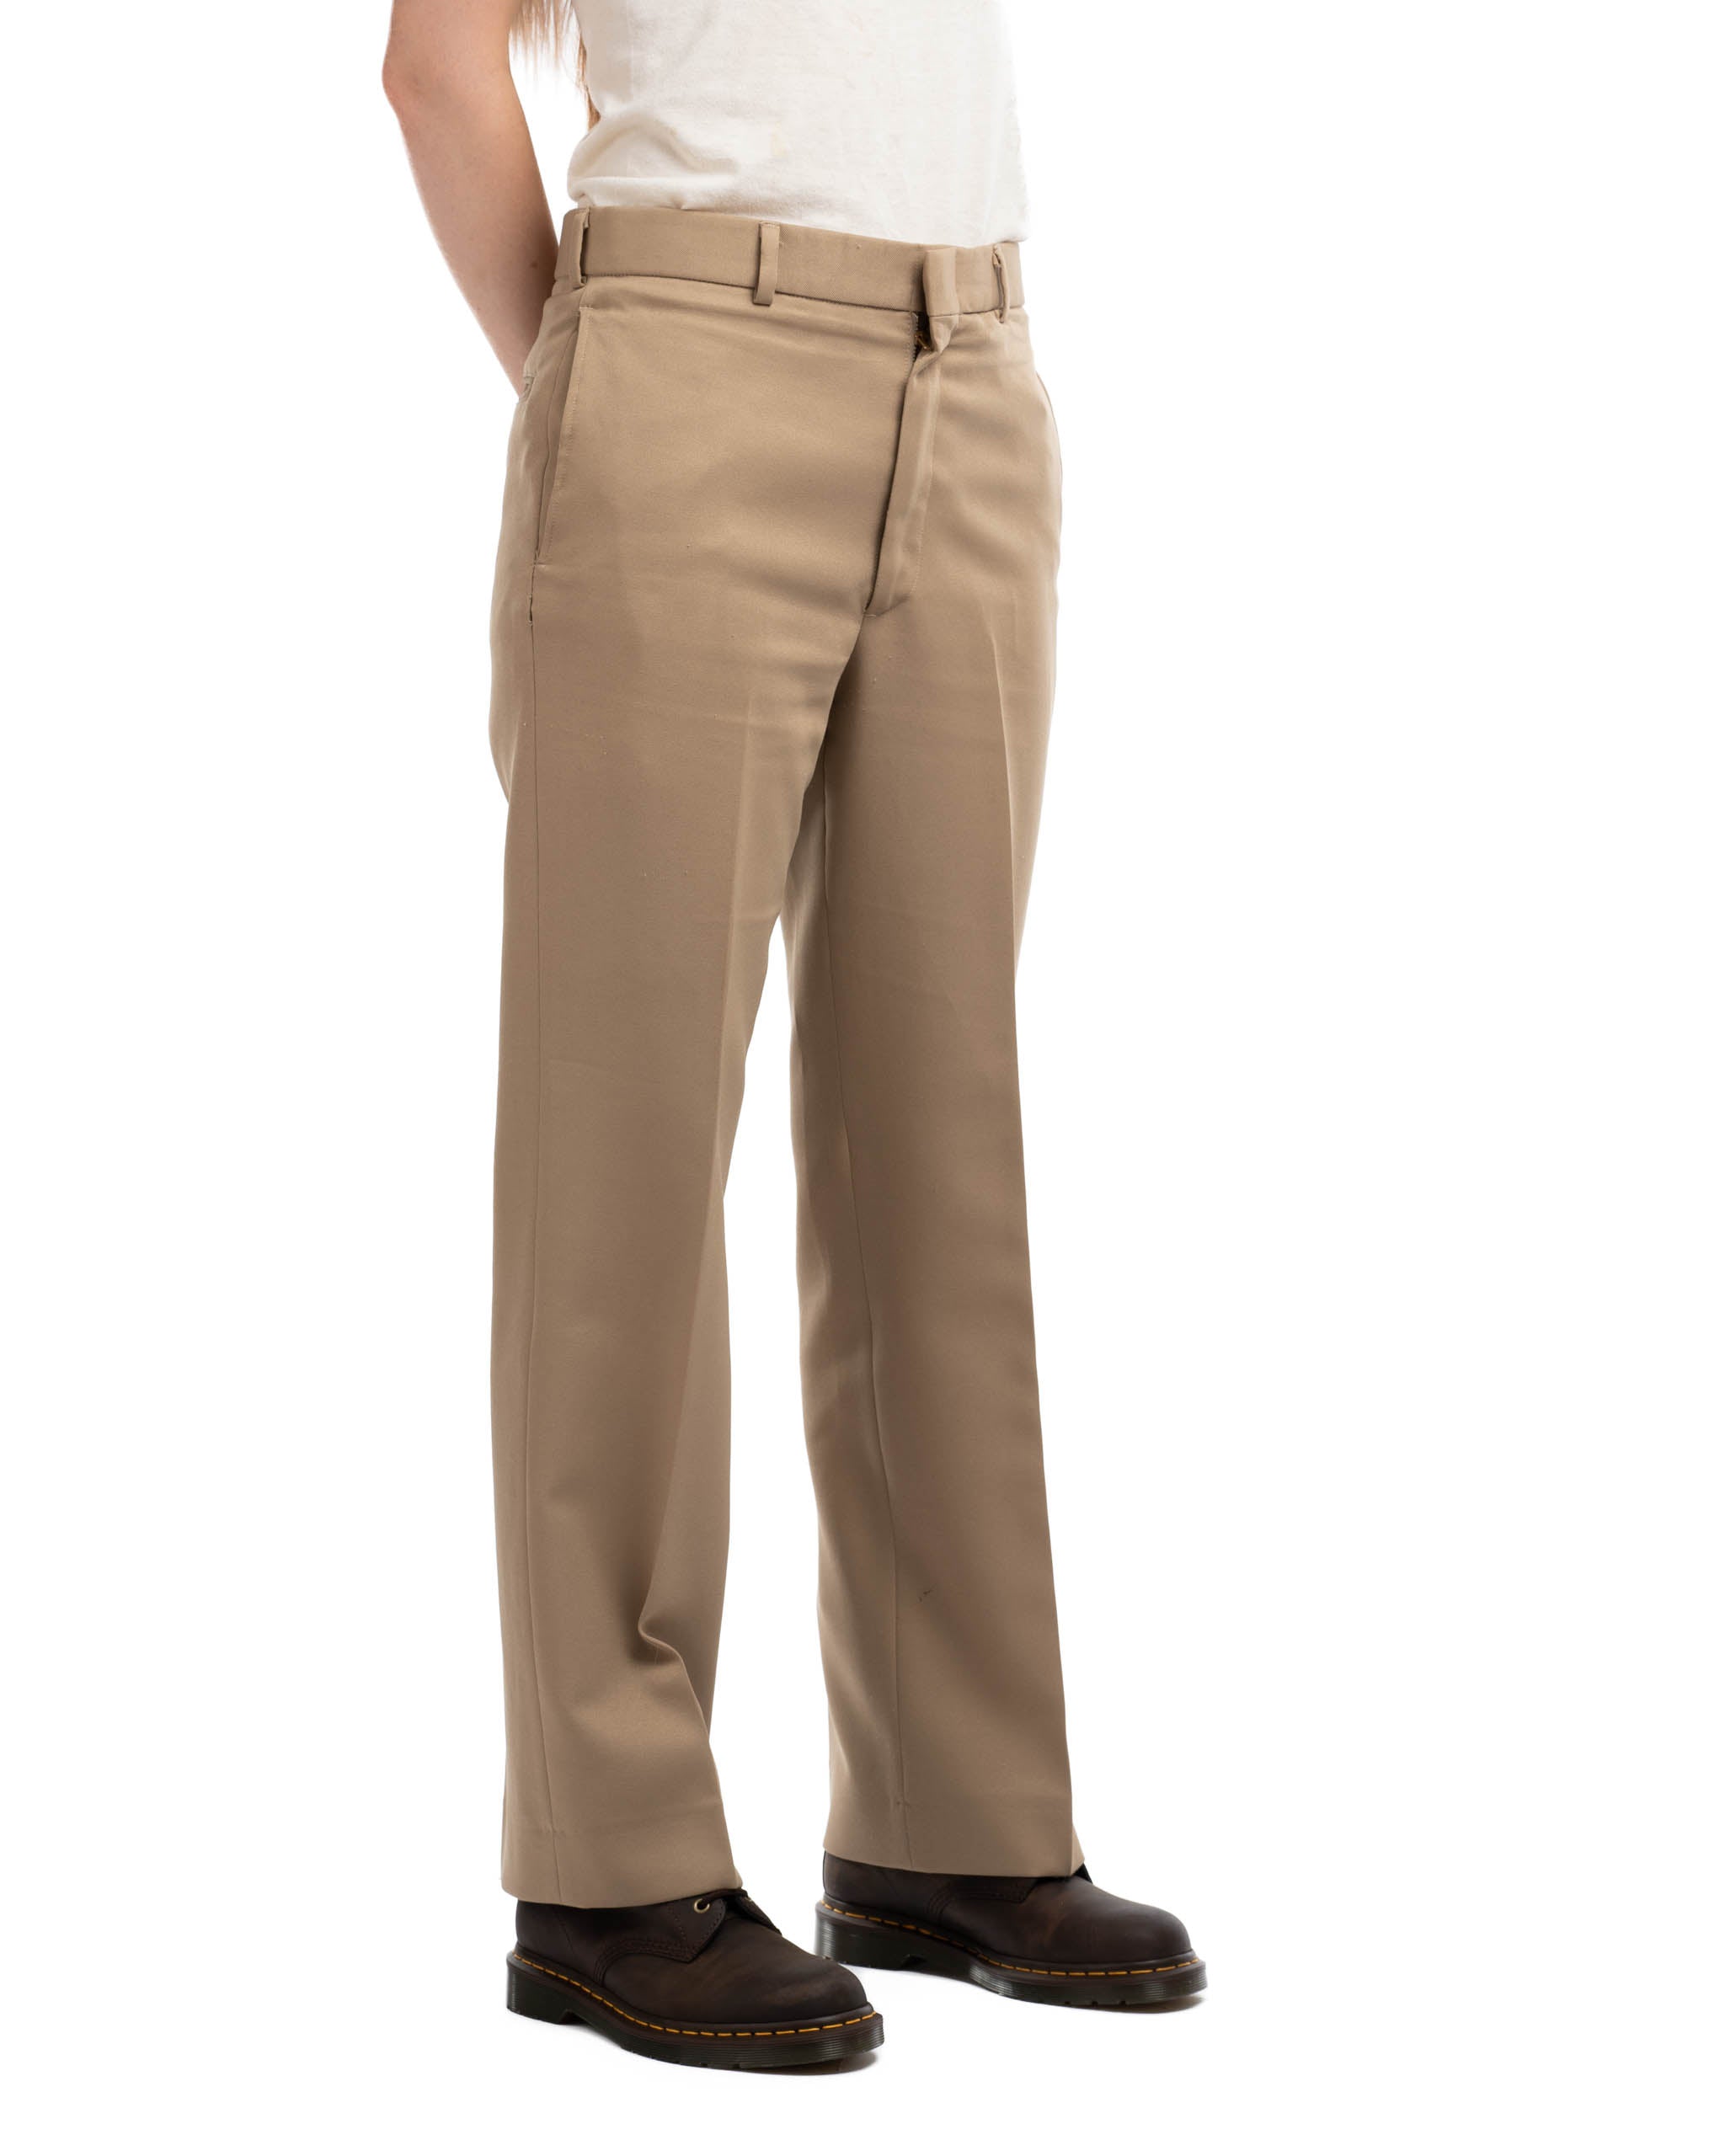 Navy Blue Cotton School Uniform Trousers at Rs 155/piece | स्कूल ट्राउजर in  Berhampore | ID: 25183708733